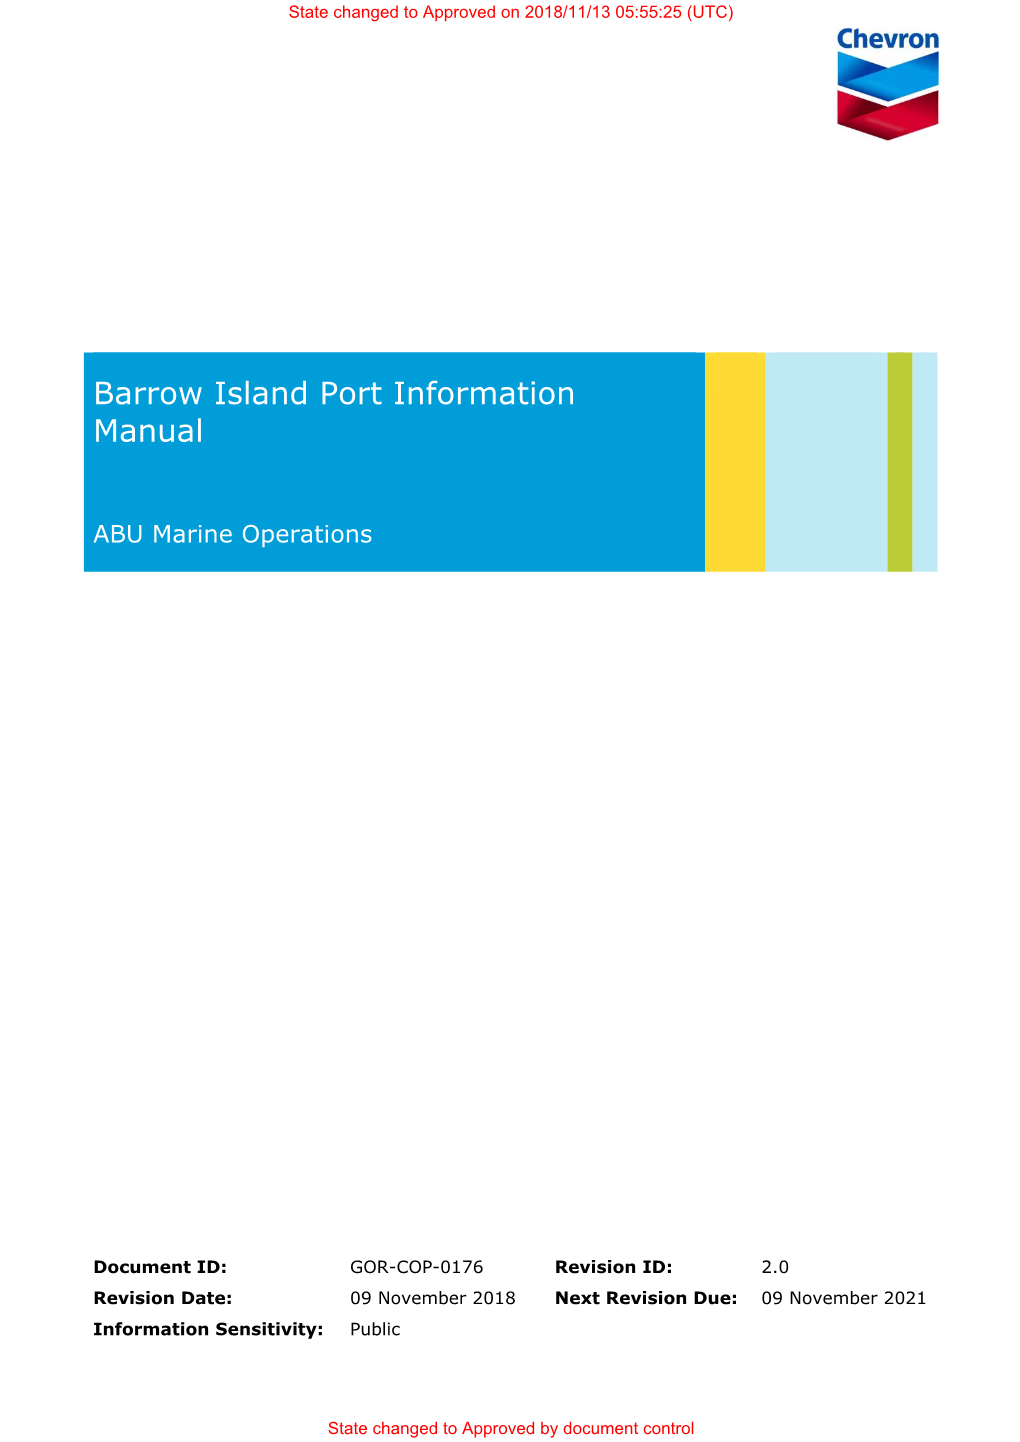 Barrow Island Port Information Manual